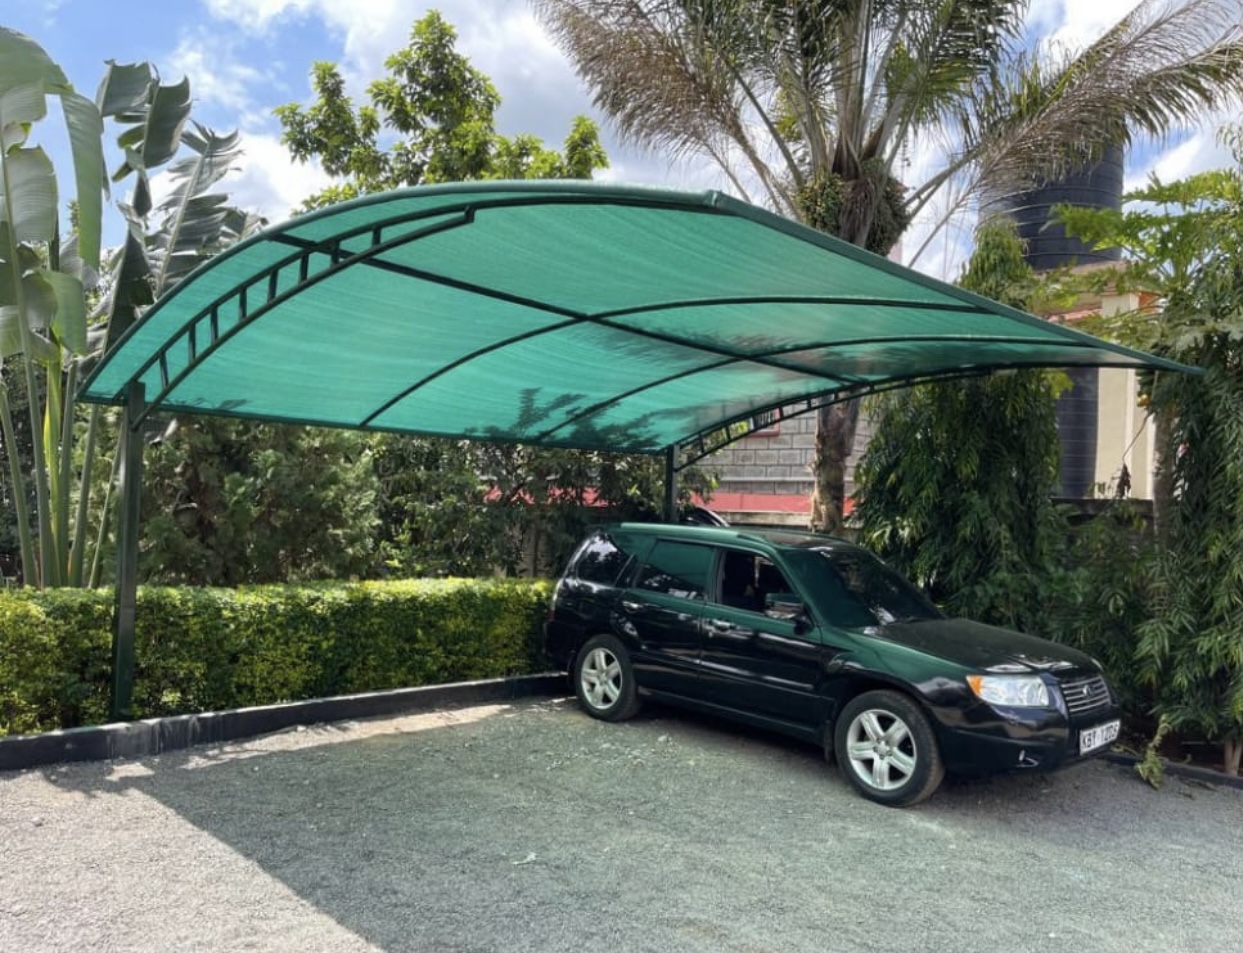 Modern Carport Installer in Mombasa-Curved Design Car Shade-Waterproof Green Shade Net Canopy-Vehicle Parking Shade-Luxury Outdoor Shade-Parking Tent-Garage